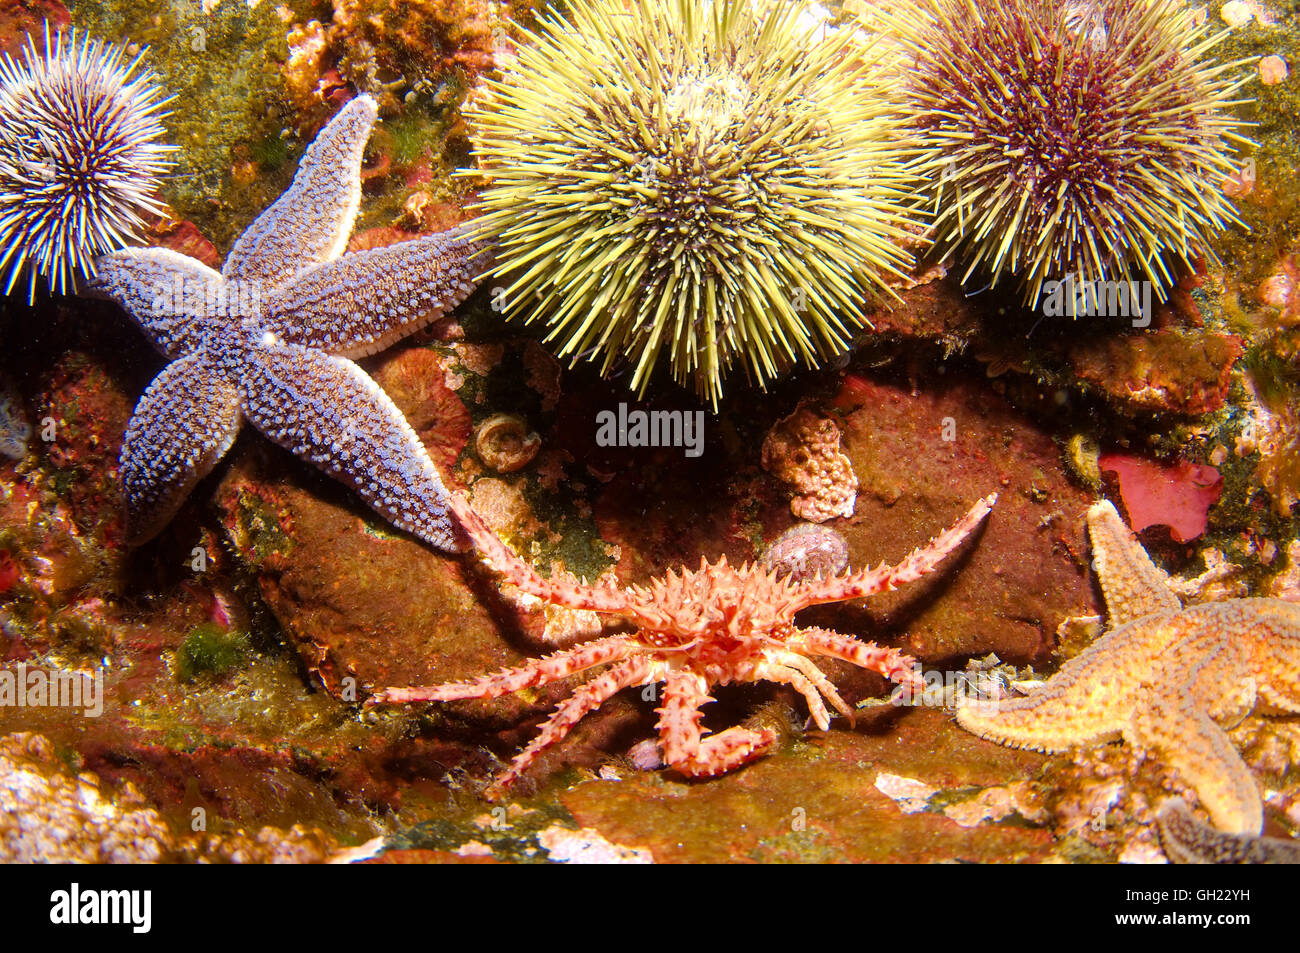 Baby Red king crab, Kamchatka crab or Alaskan king crab (Paralithodes camtschaticus) hiding among sea urchins and starfish Stock Photo